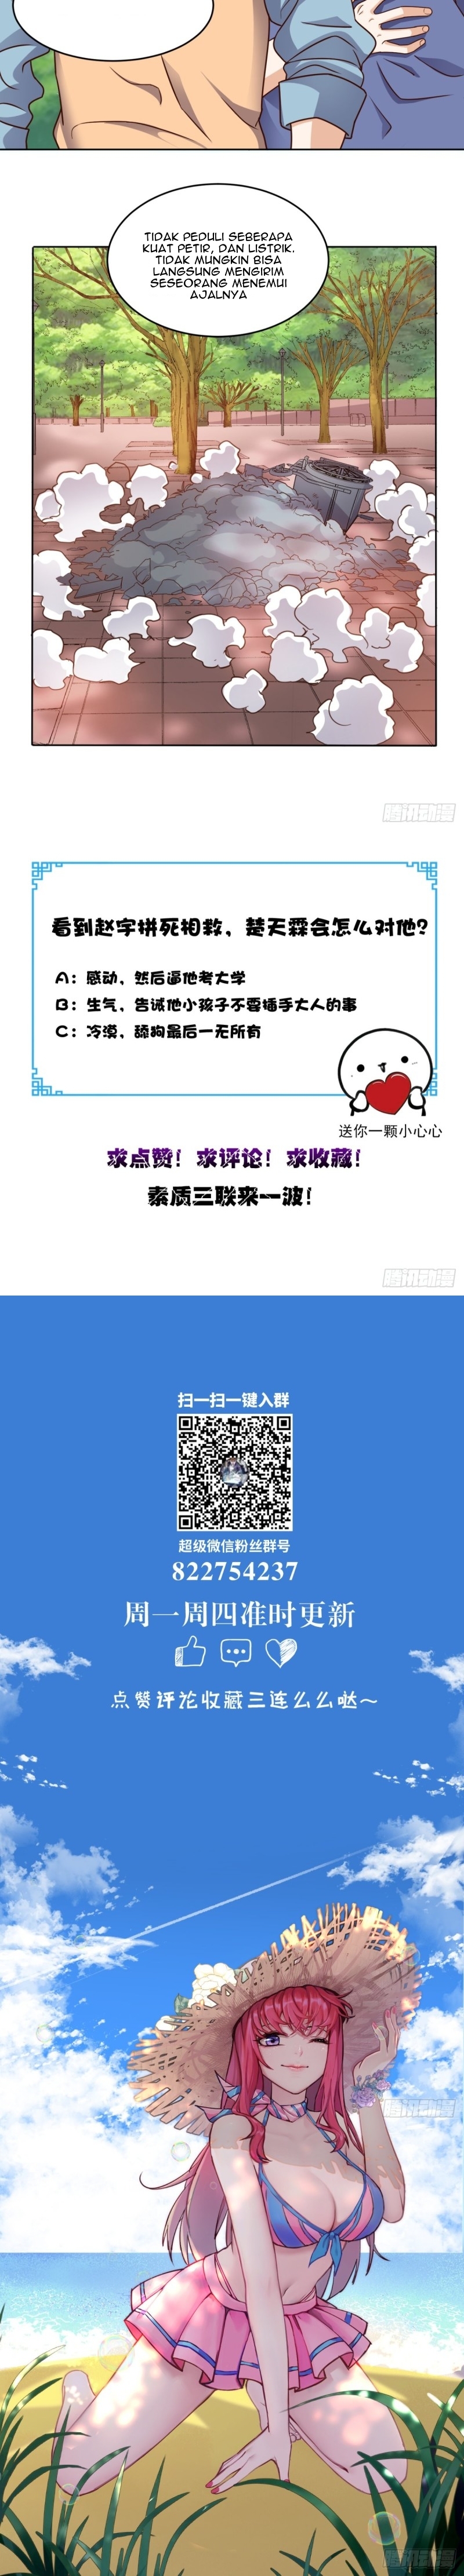 Super WeChat Chapter 81 8